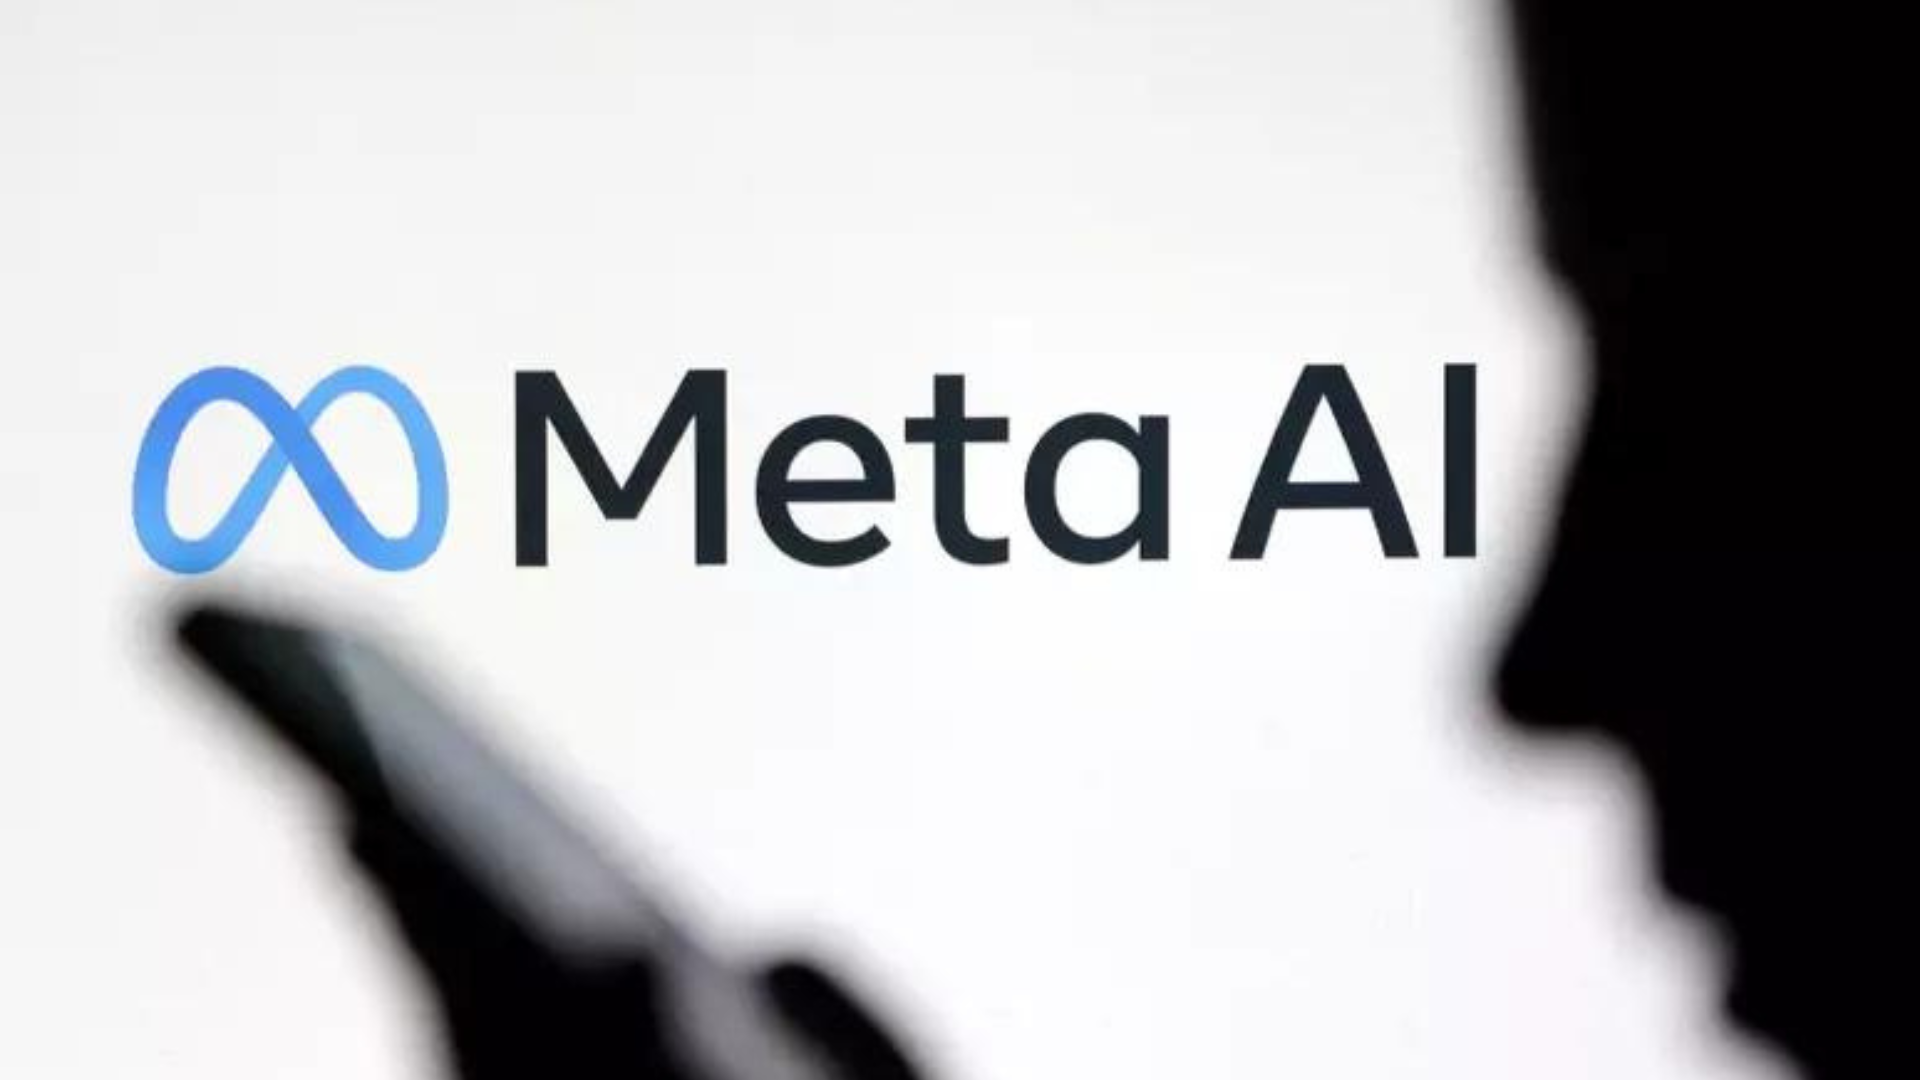 Meta anuncia IA integrada ao Instagram e WhatsApp